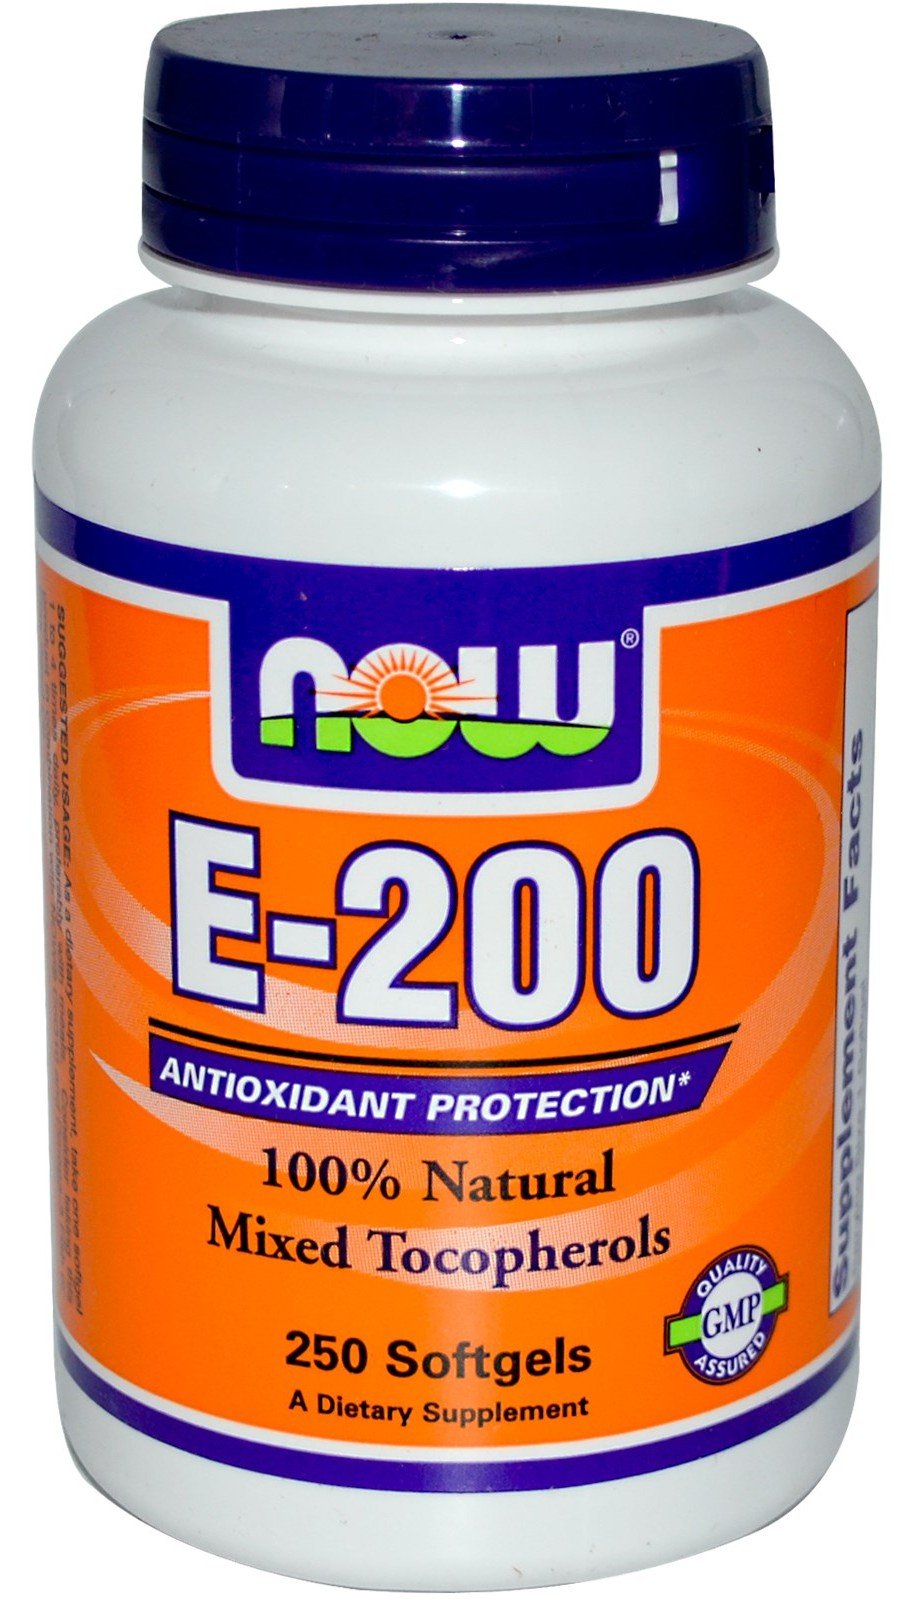 E-200, 250 pcs, Now. Vitamin E. General Health Antioxidant properties 